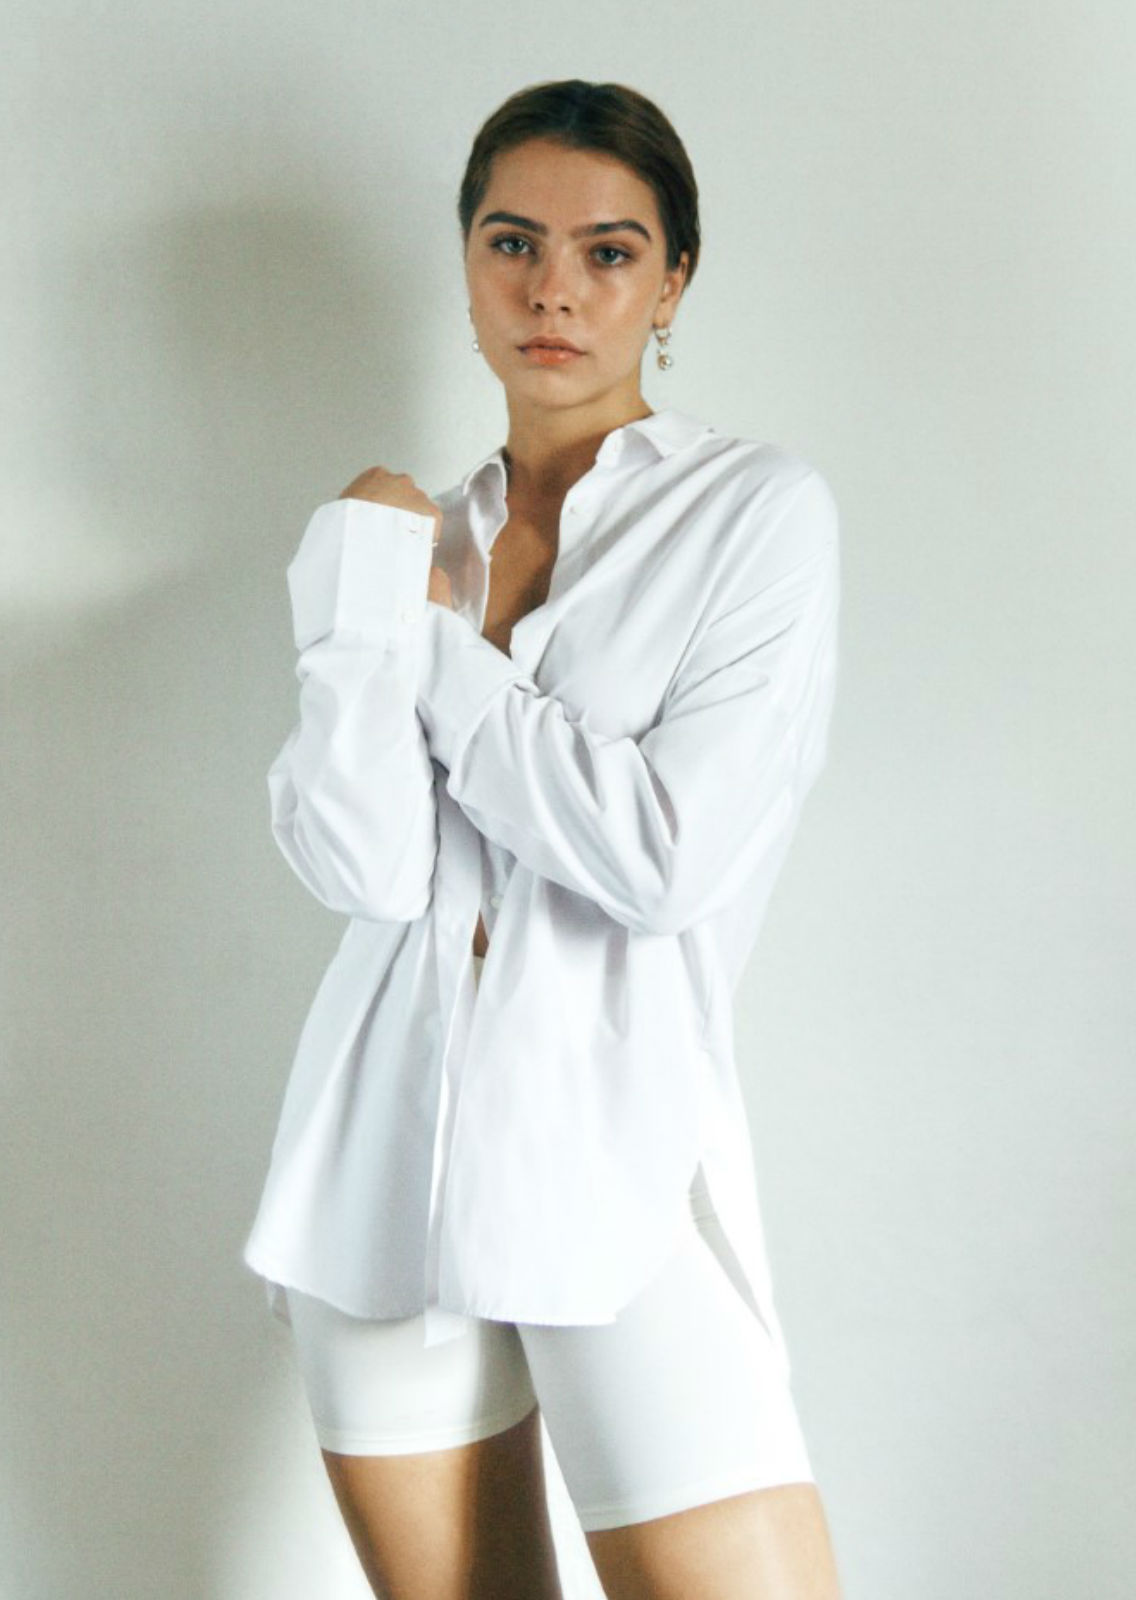 MAIIA ZHITKOVA. Carmen Duran Model Agency.